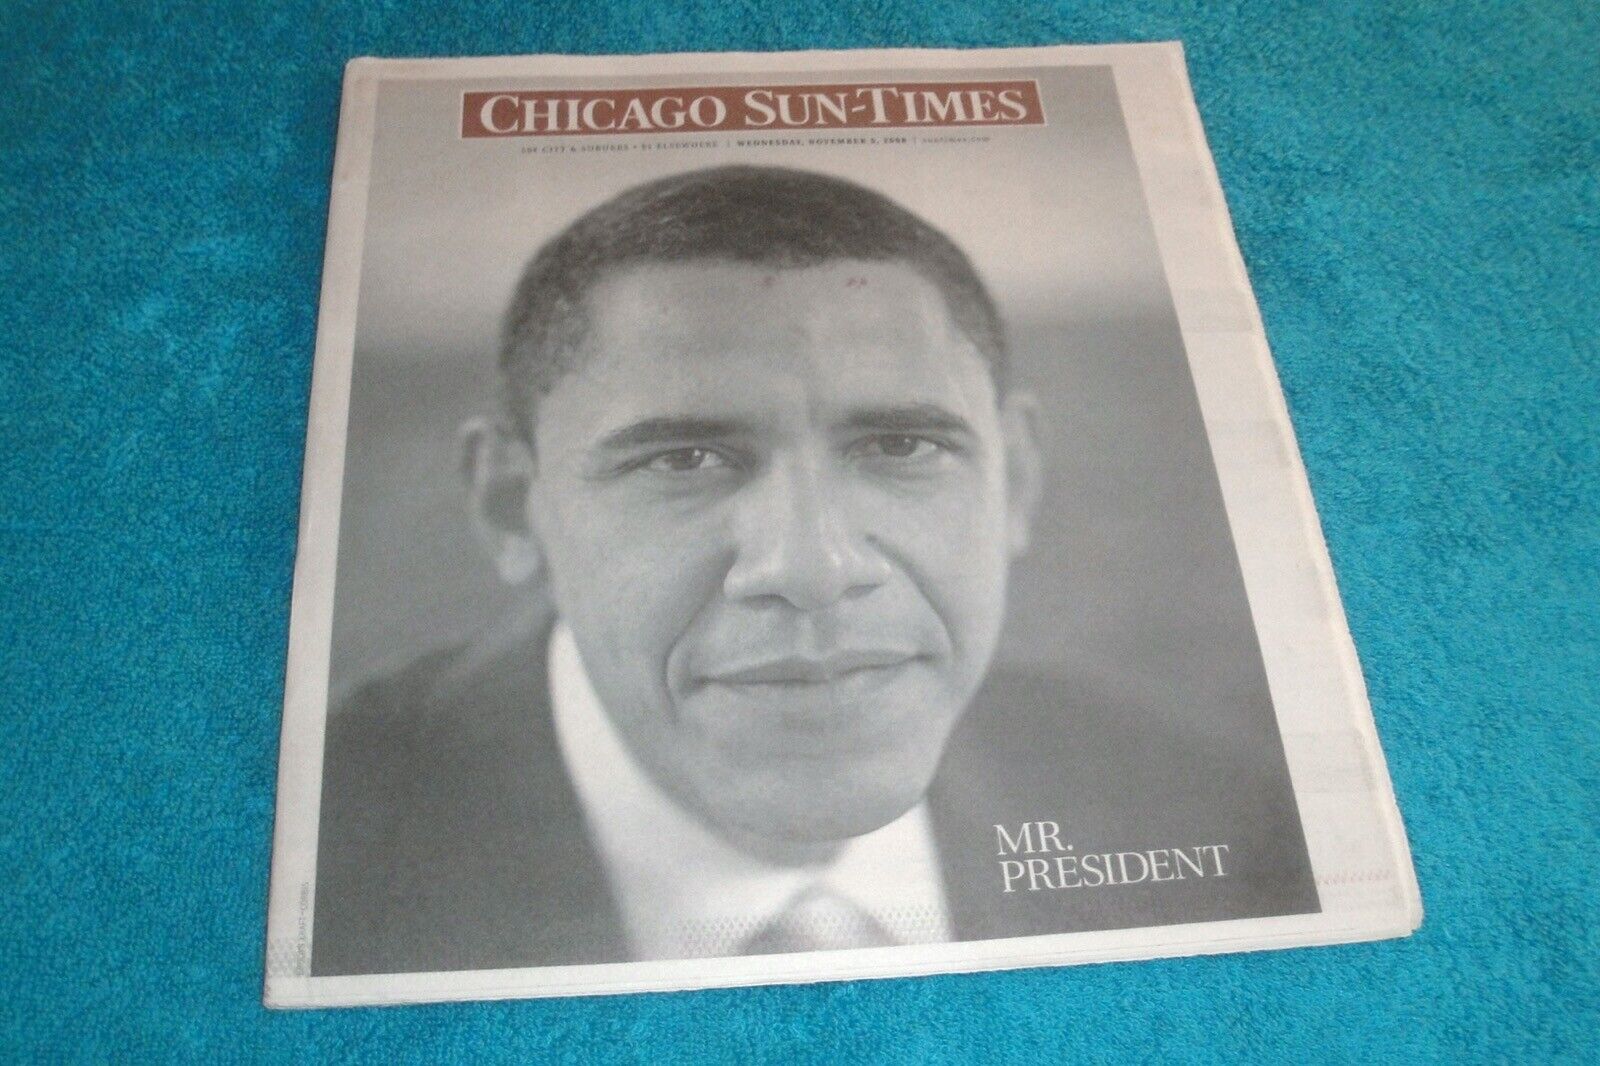 Barack Obama CHICAGO SUN-TIMES NEWSPAPER Wednesday November 5, 2008/Mr President